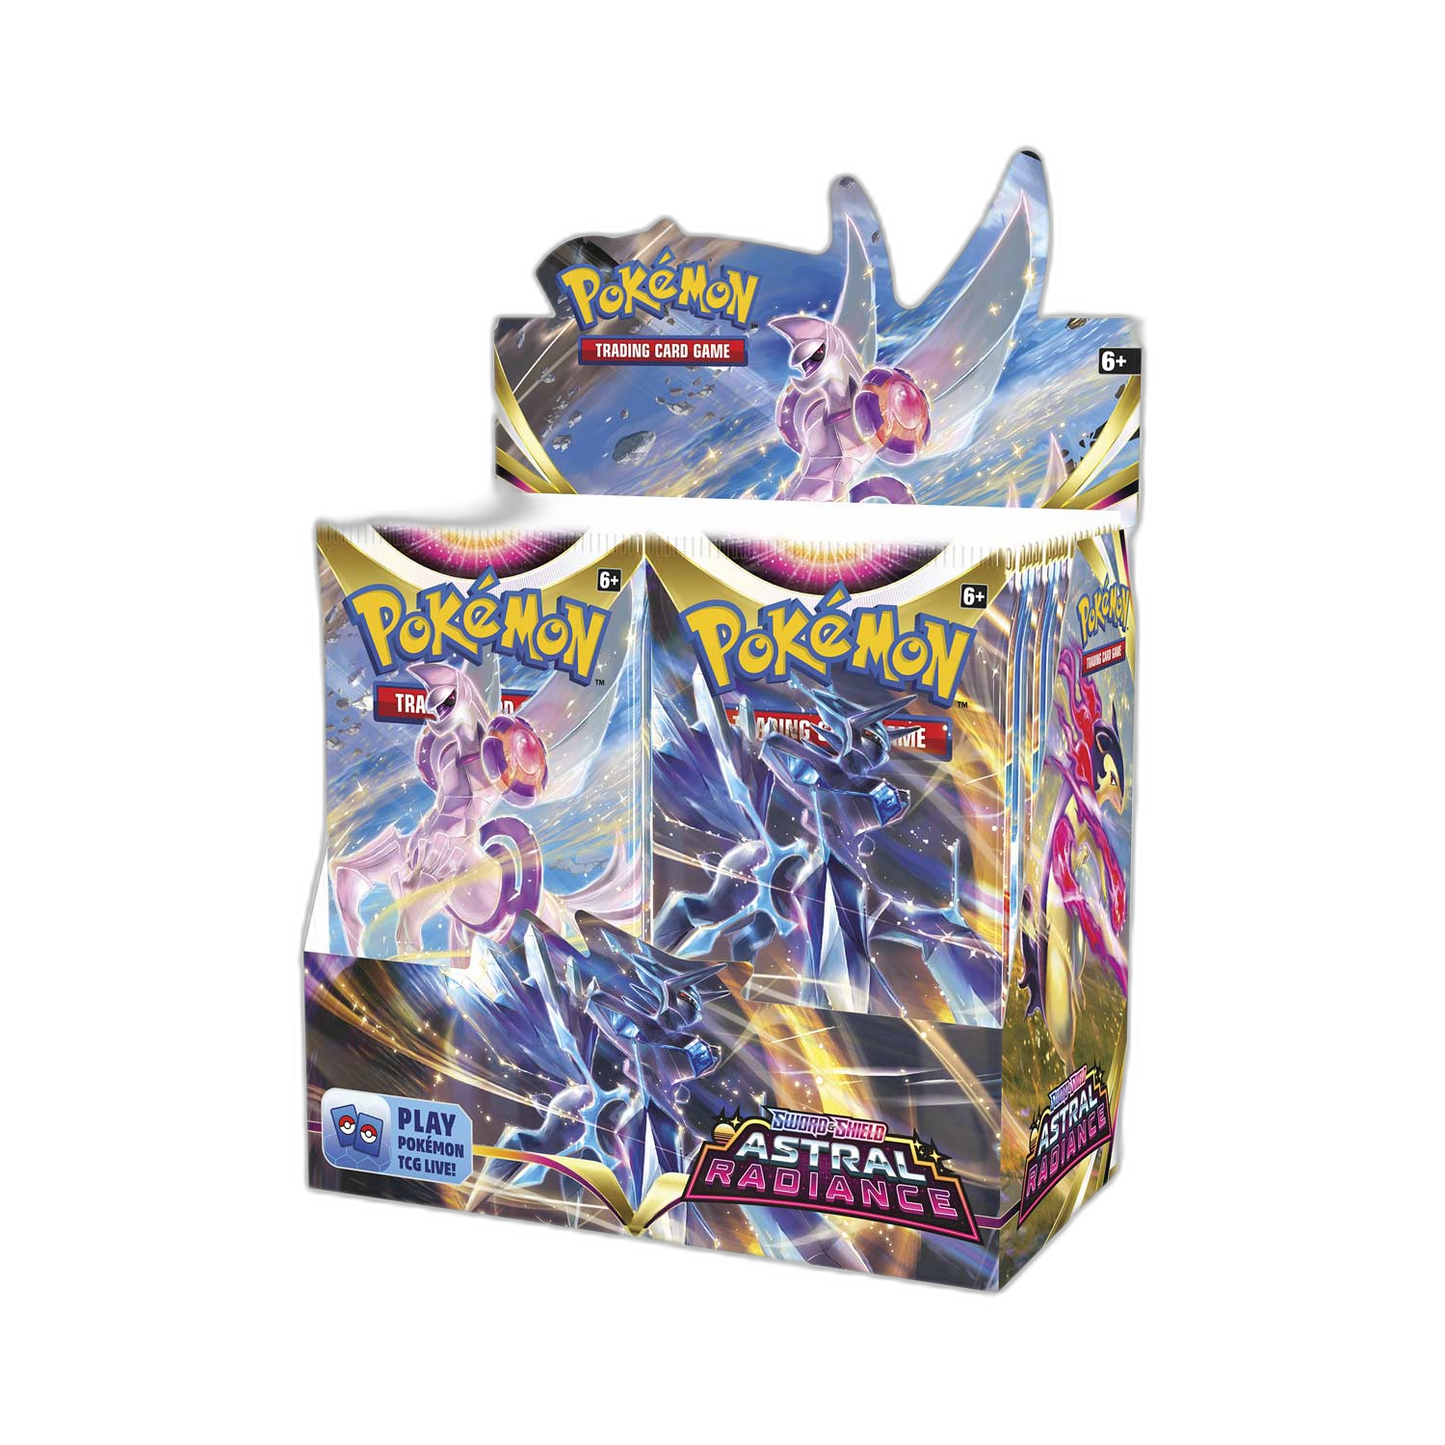 Pokémon - Sword & Shield - Astral Radiance - Booster Box